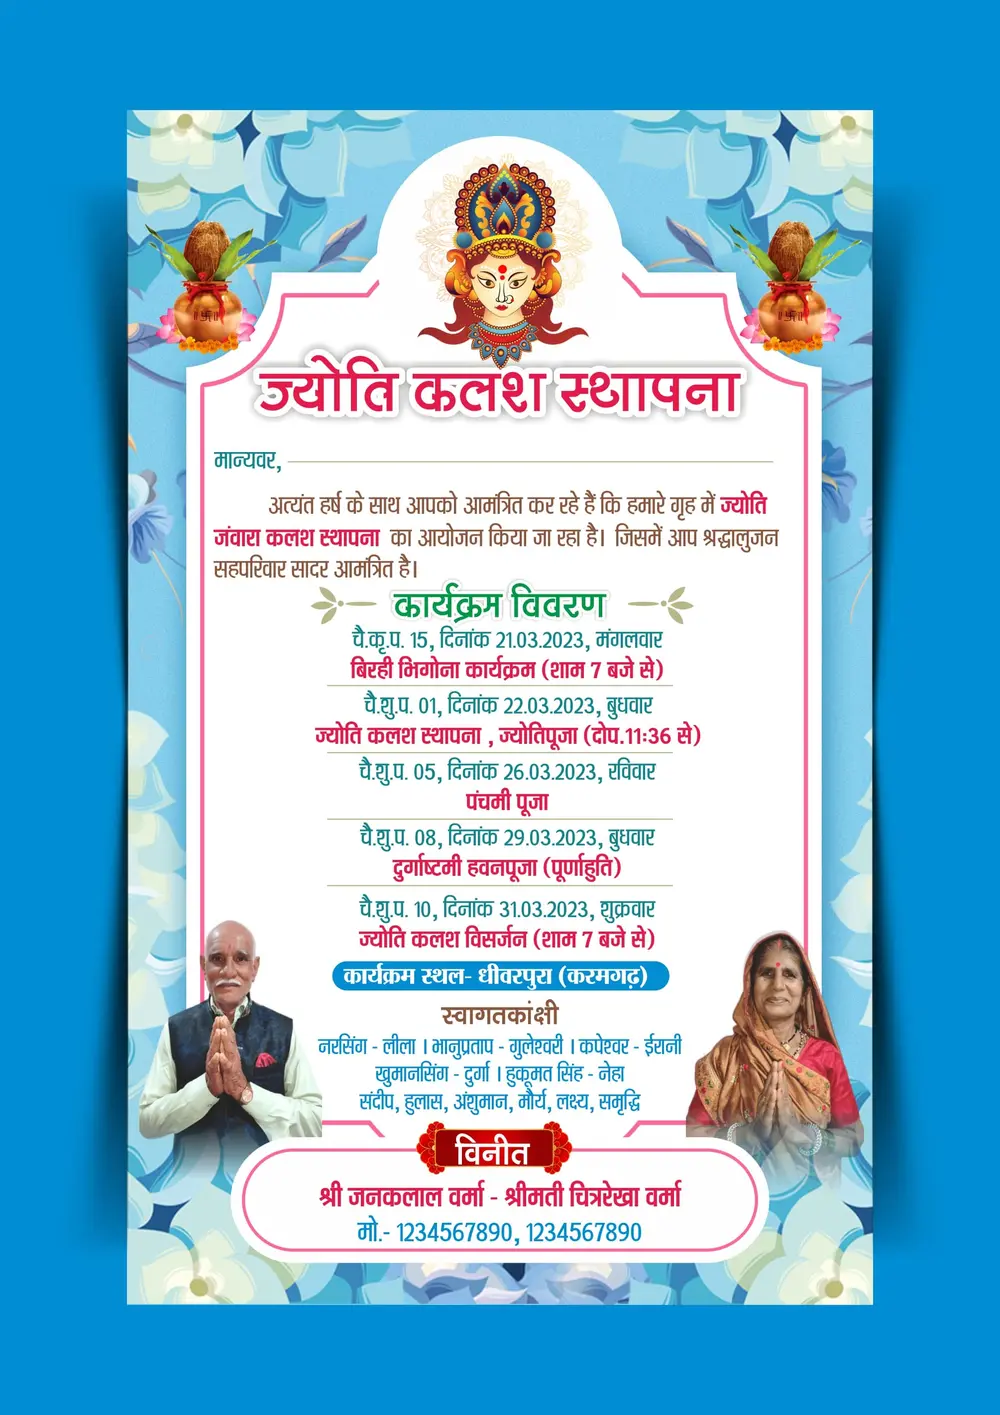 FHD_Jyoti kalas sthapna invitation card in hindi cdr and psd file download_130223